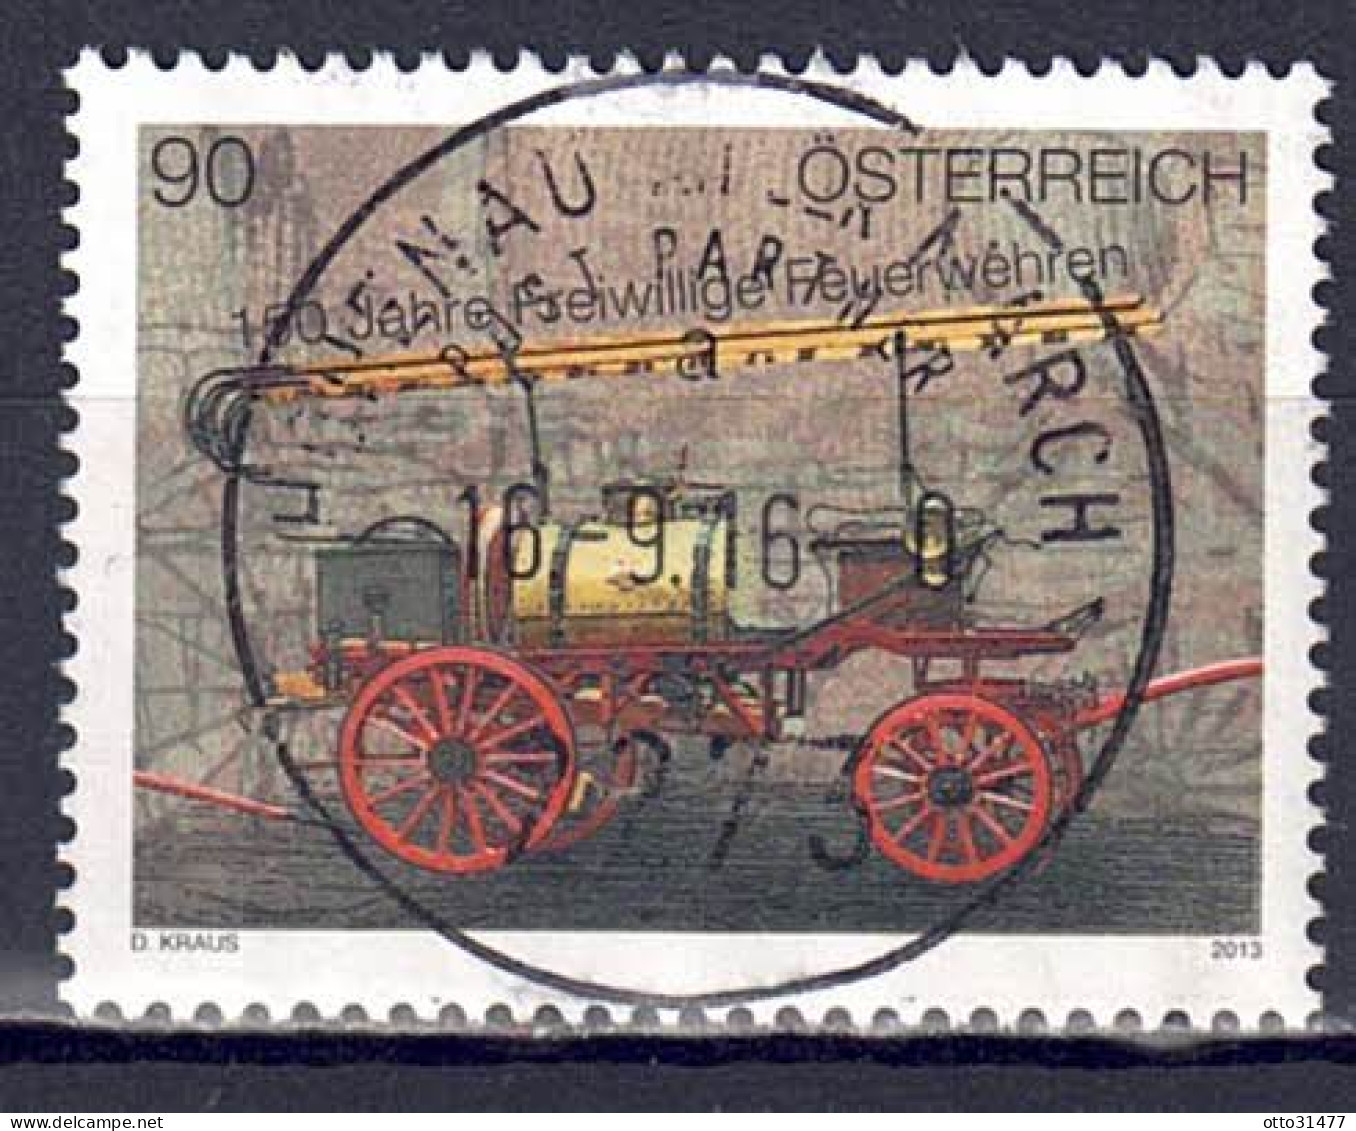 Österreich 2013 - Feuerwehr, MiNr. 3089, Gestempelt / Used - Used Stamps